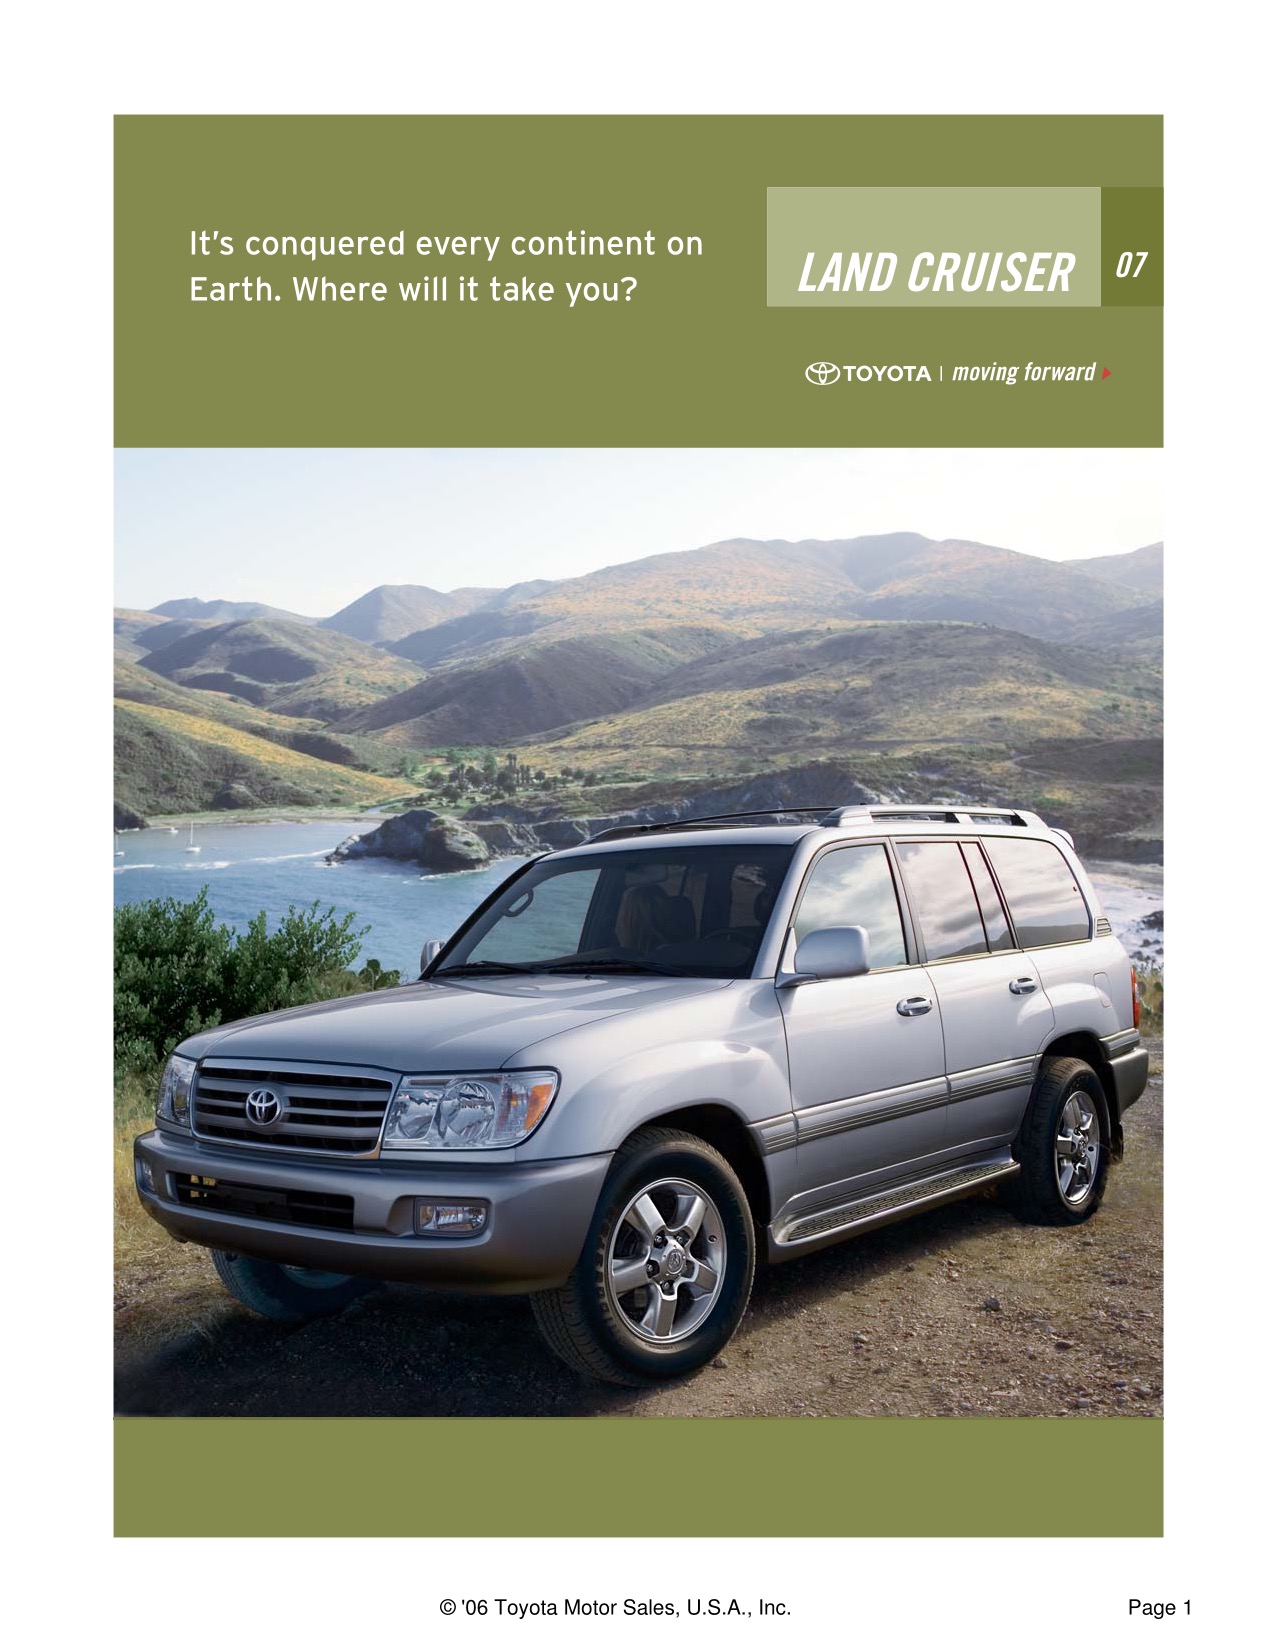 2007 Toyota Land Cruiser Brochure